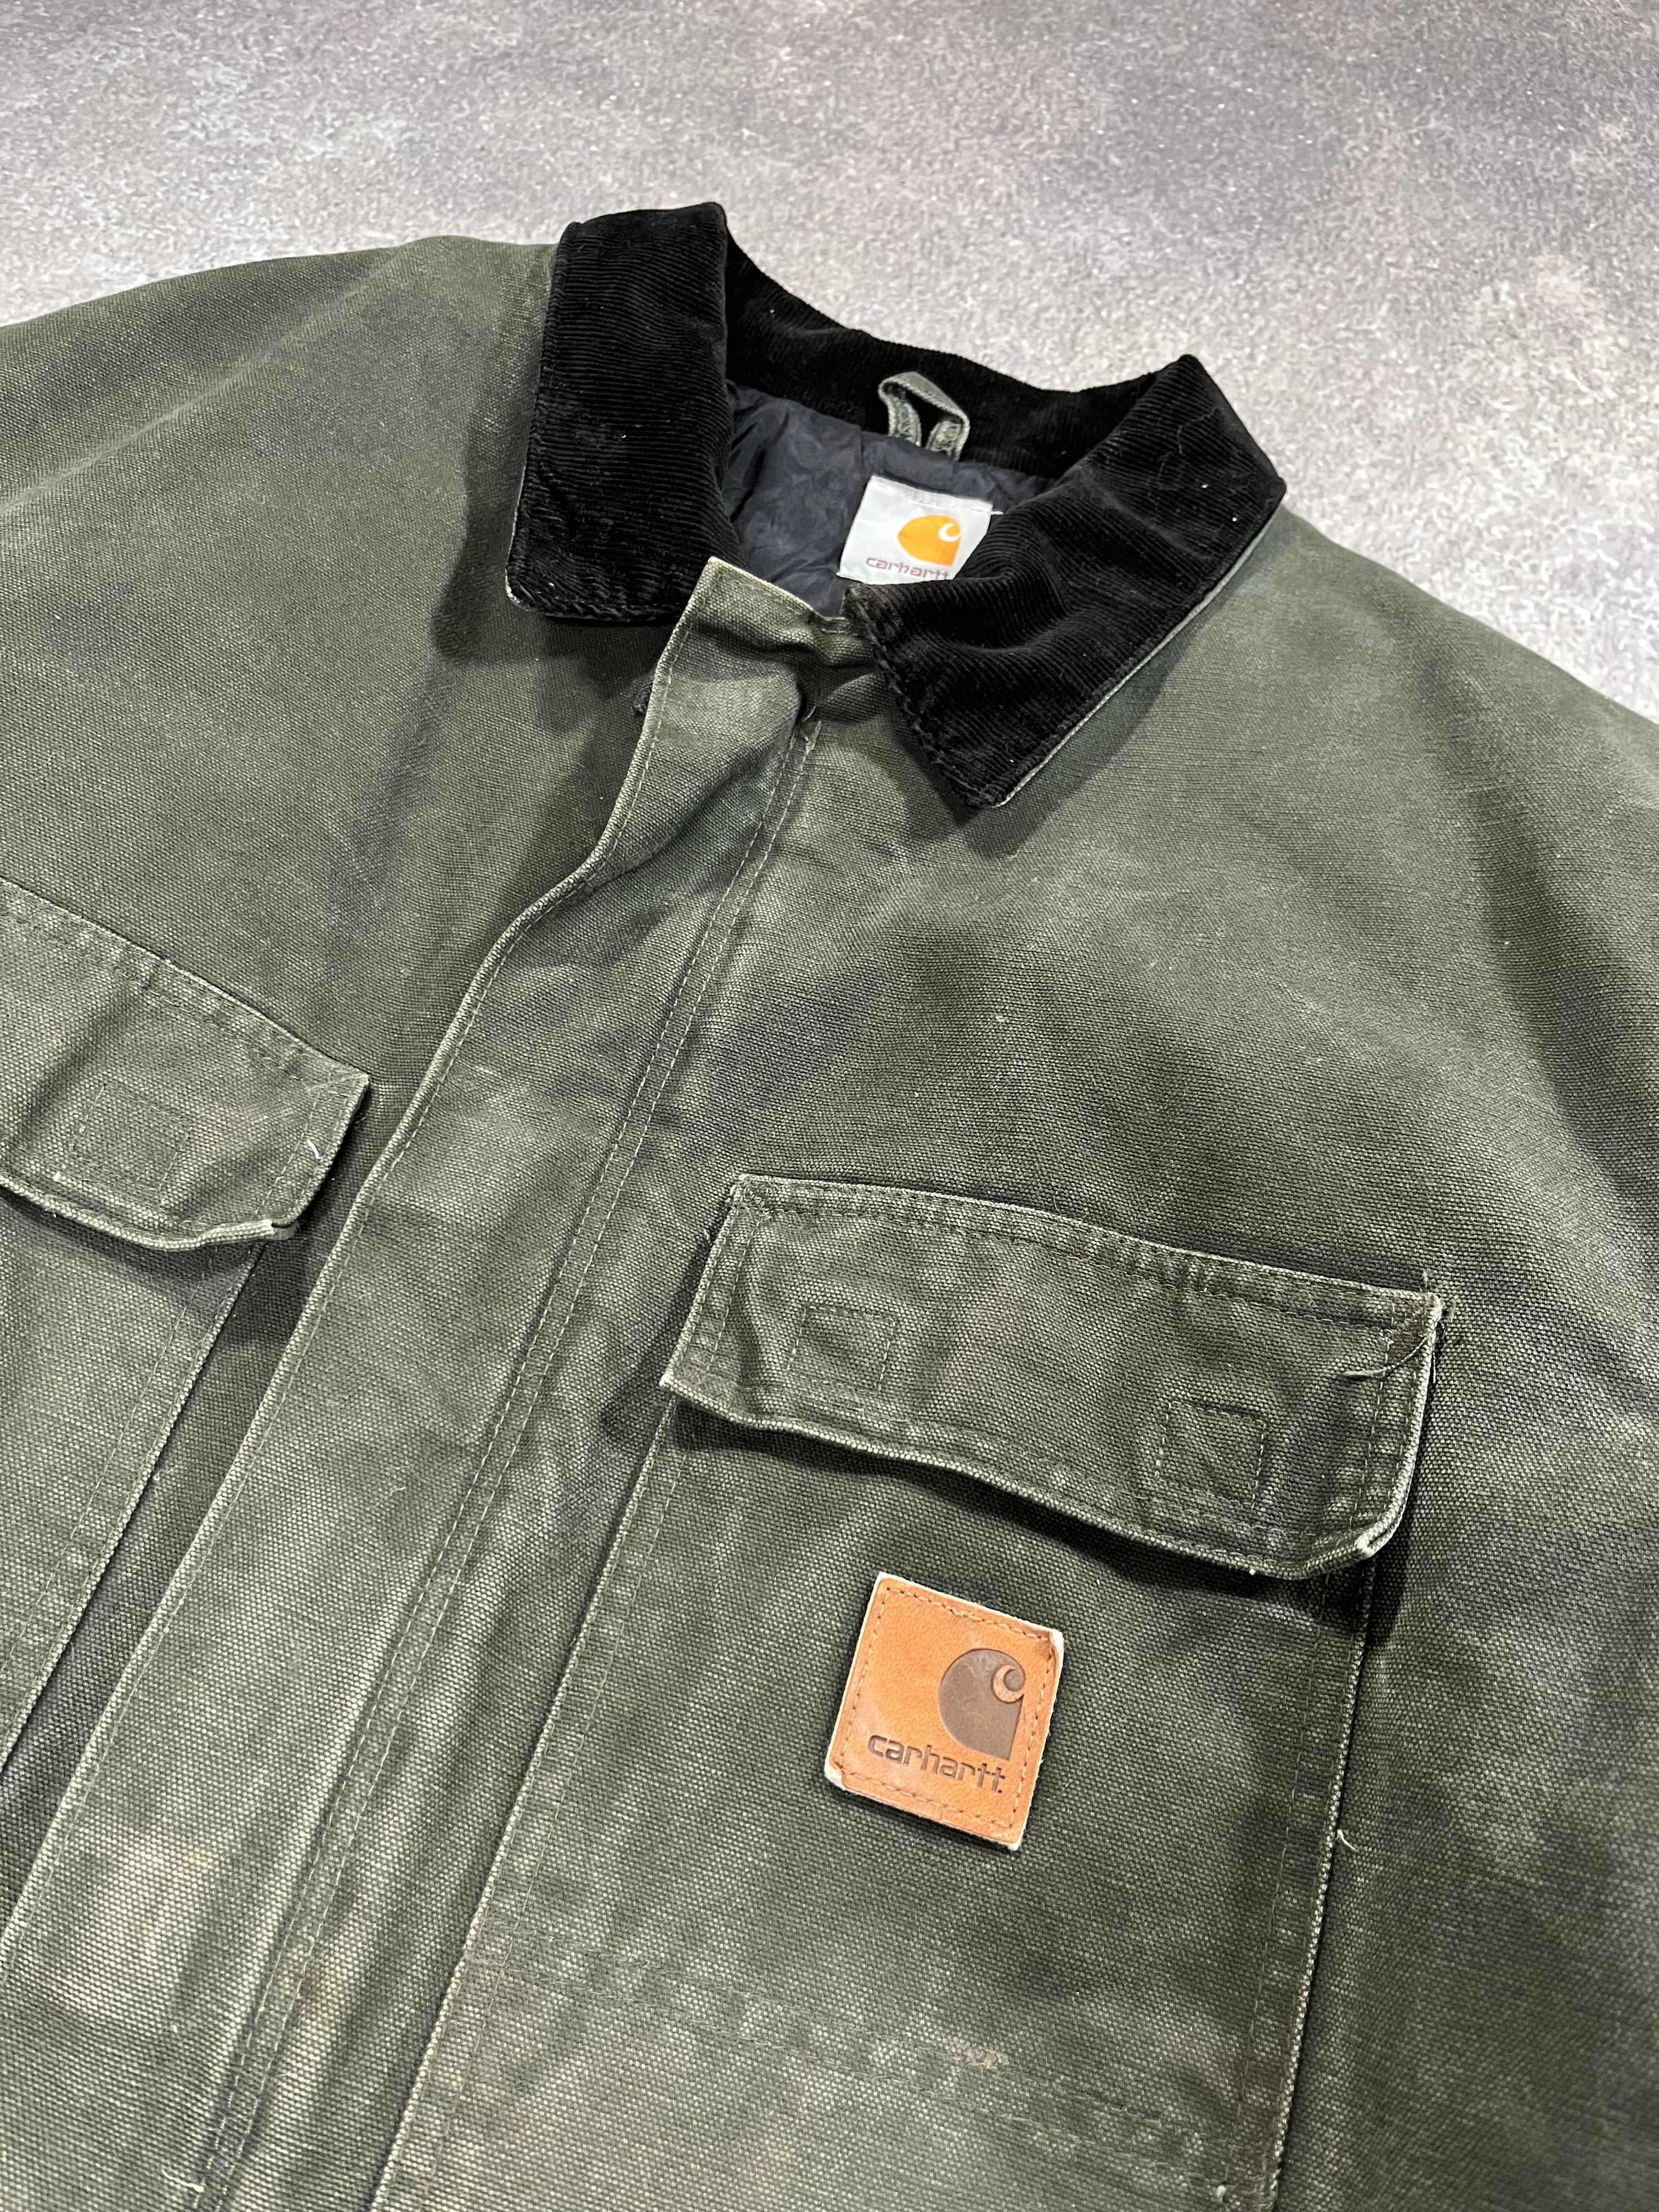 Carhartt Chore Coat Jacket Green // X-Large - RHAGHOUSE VINTAGE